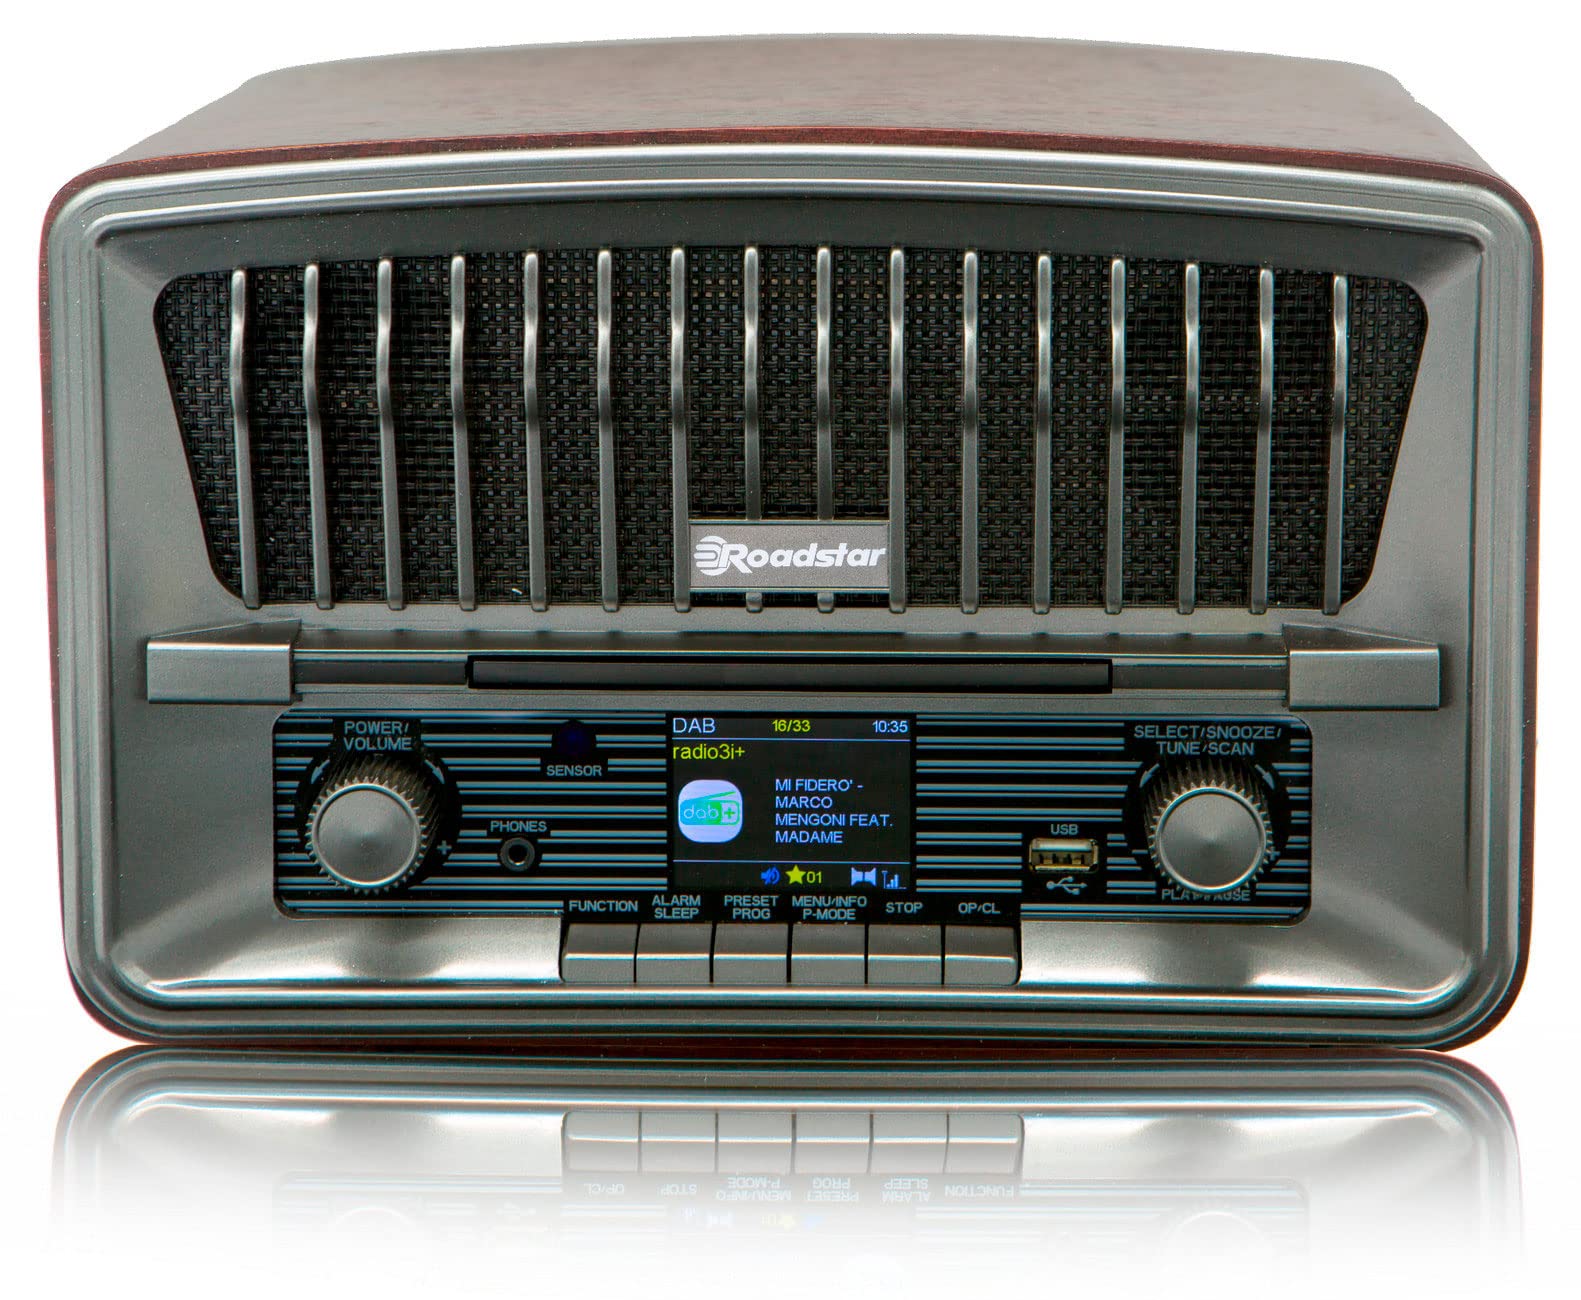 Roadstar HRA-270CD+BT Tragbares CD-Radio Vintage Digital Dab/Dab+/FM, CD-MP3-Player, Bluetooth, USB, Stereo, AUX-IN, LCD-Display, Fernbedienung, Kopfhöreranschluss, Alarm, Holz